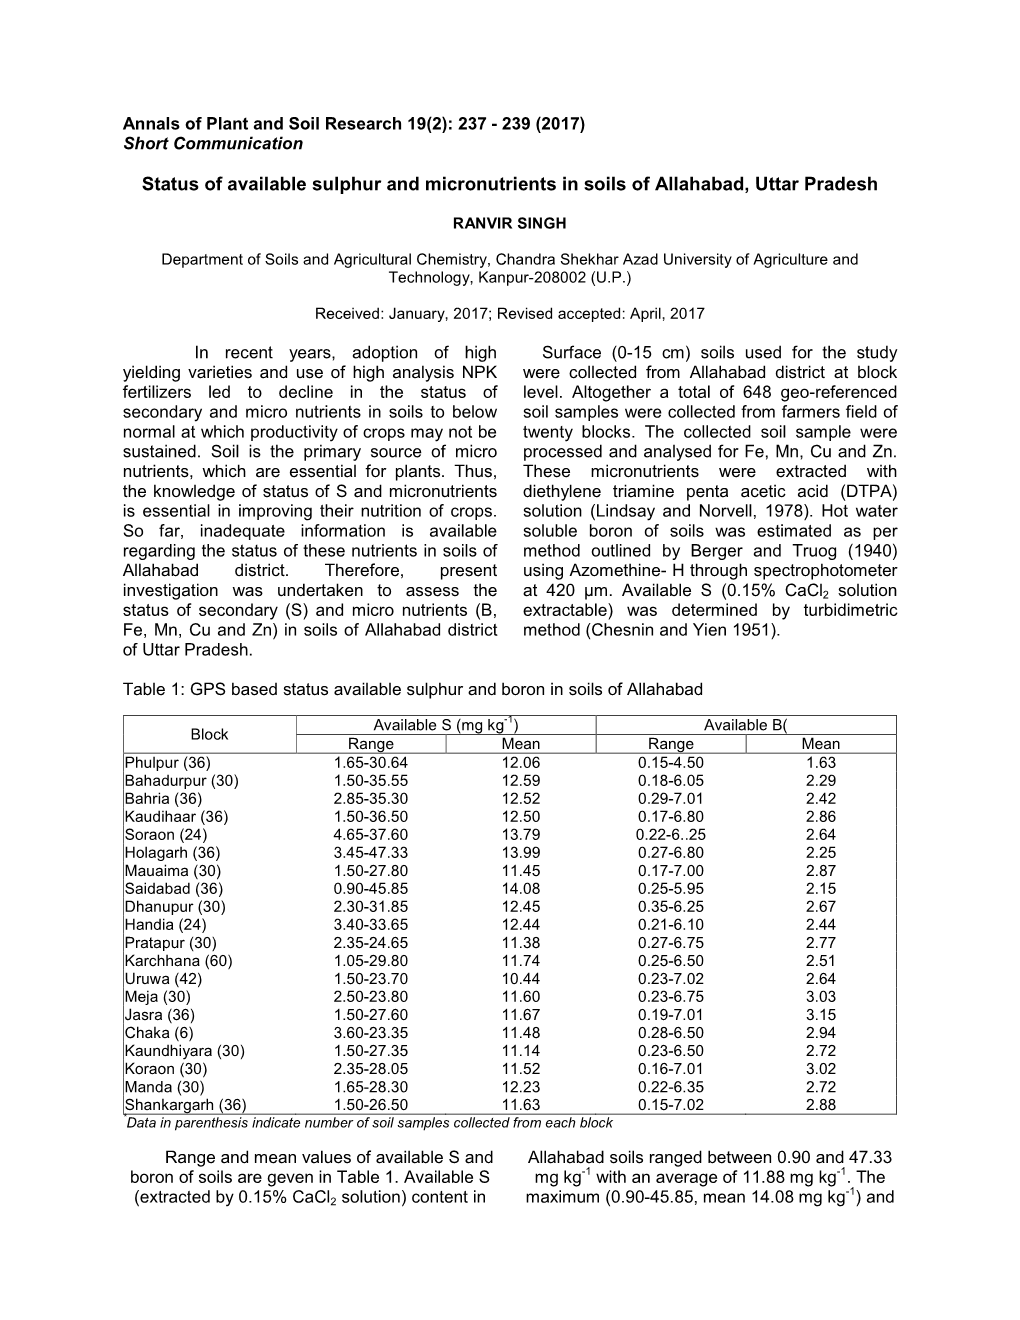 Status of Available Sulphur and Micronutrients in Soils of Allahabad, Uttar Pradesh